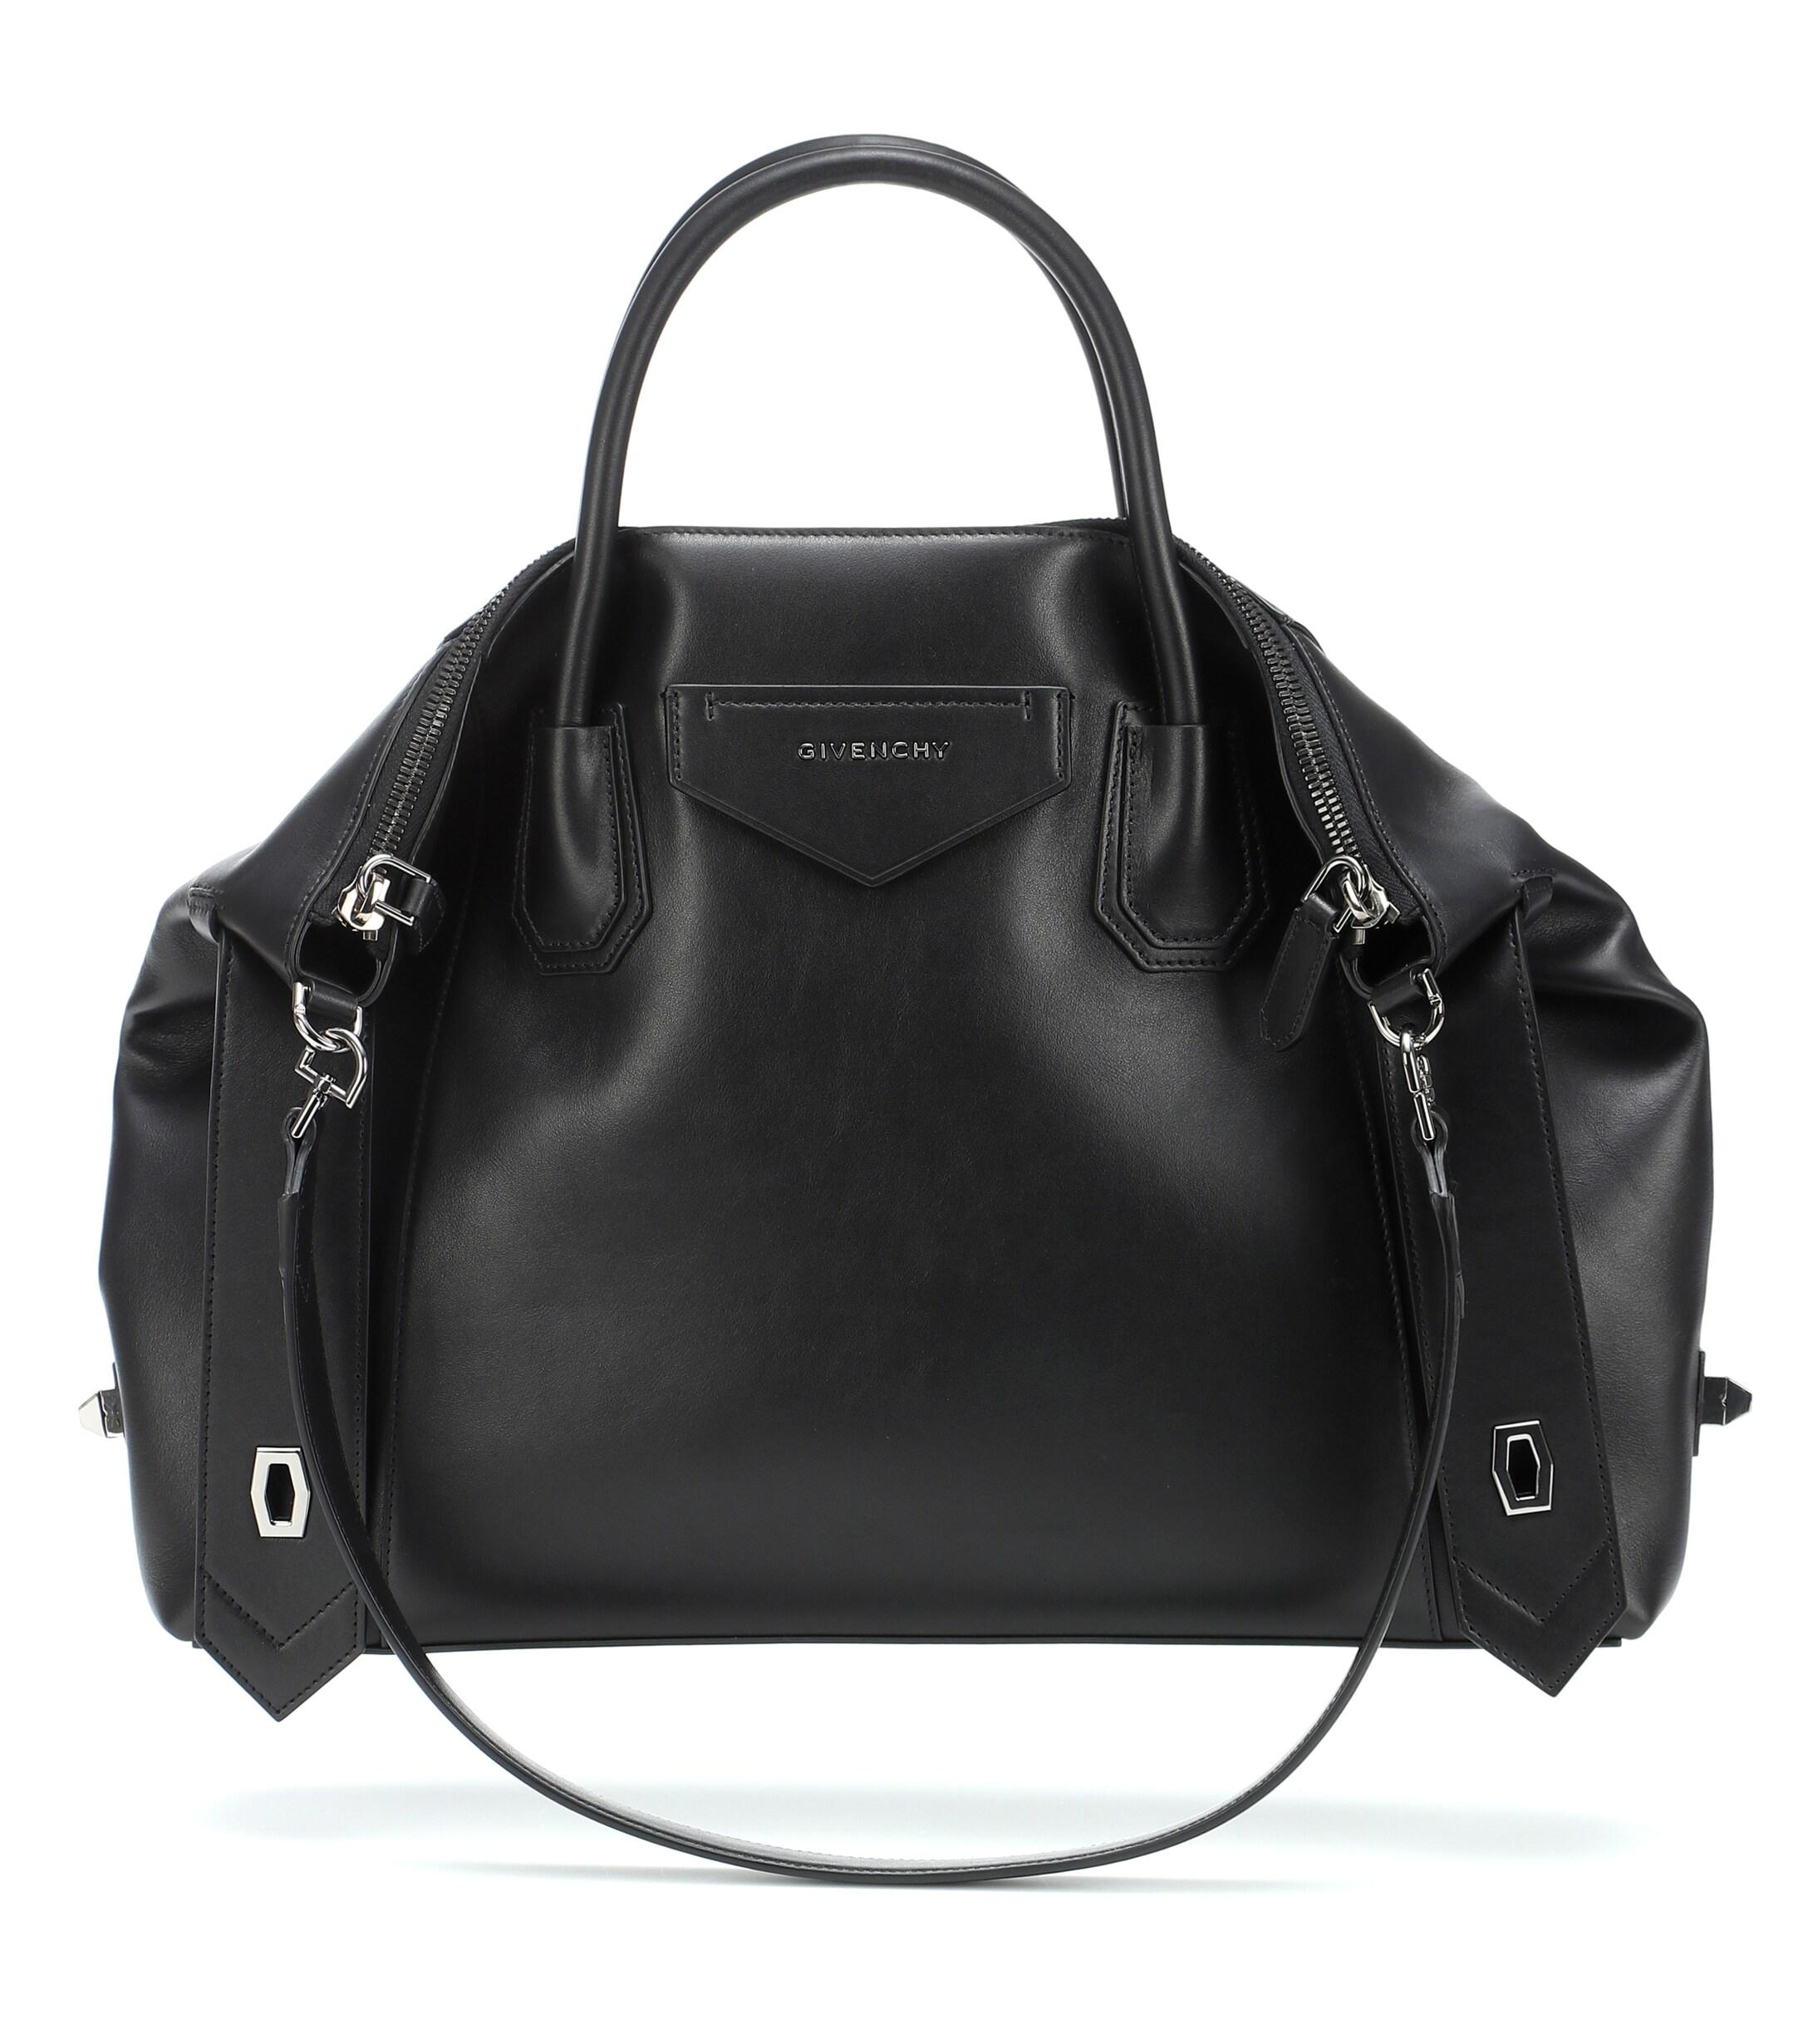 Givenchy Antigona Soft Medium Leather Tote in Black - Lyst